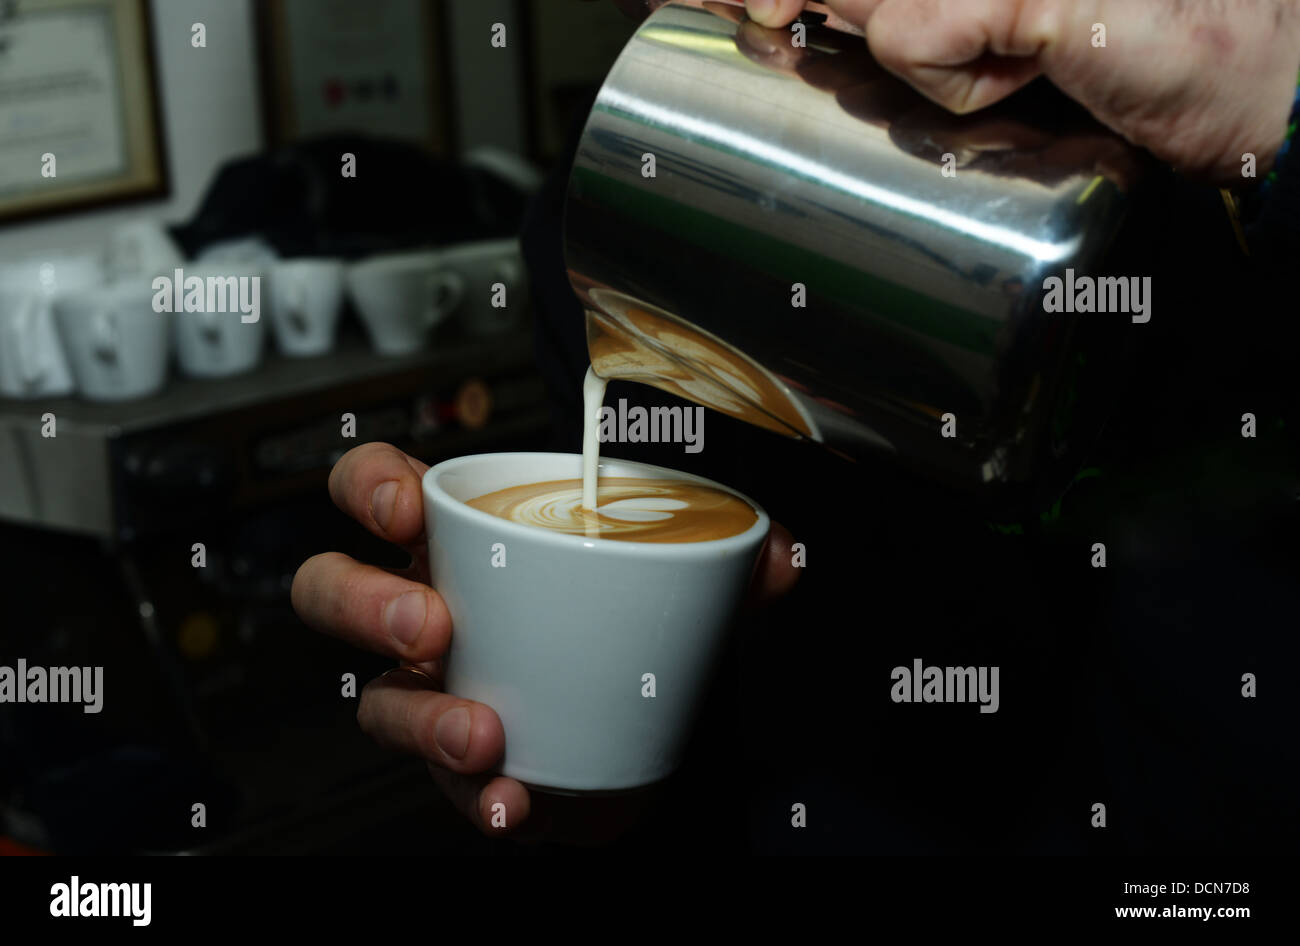 Latte-Art in process Stock Photo